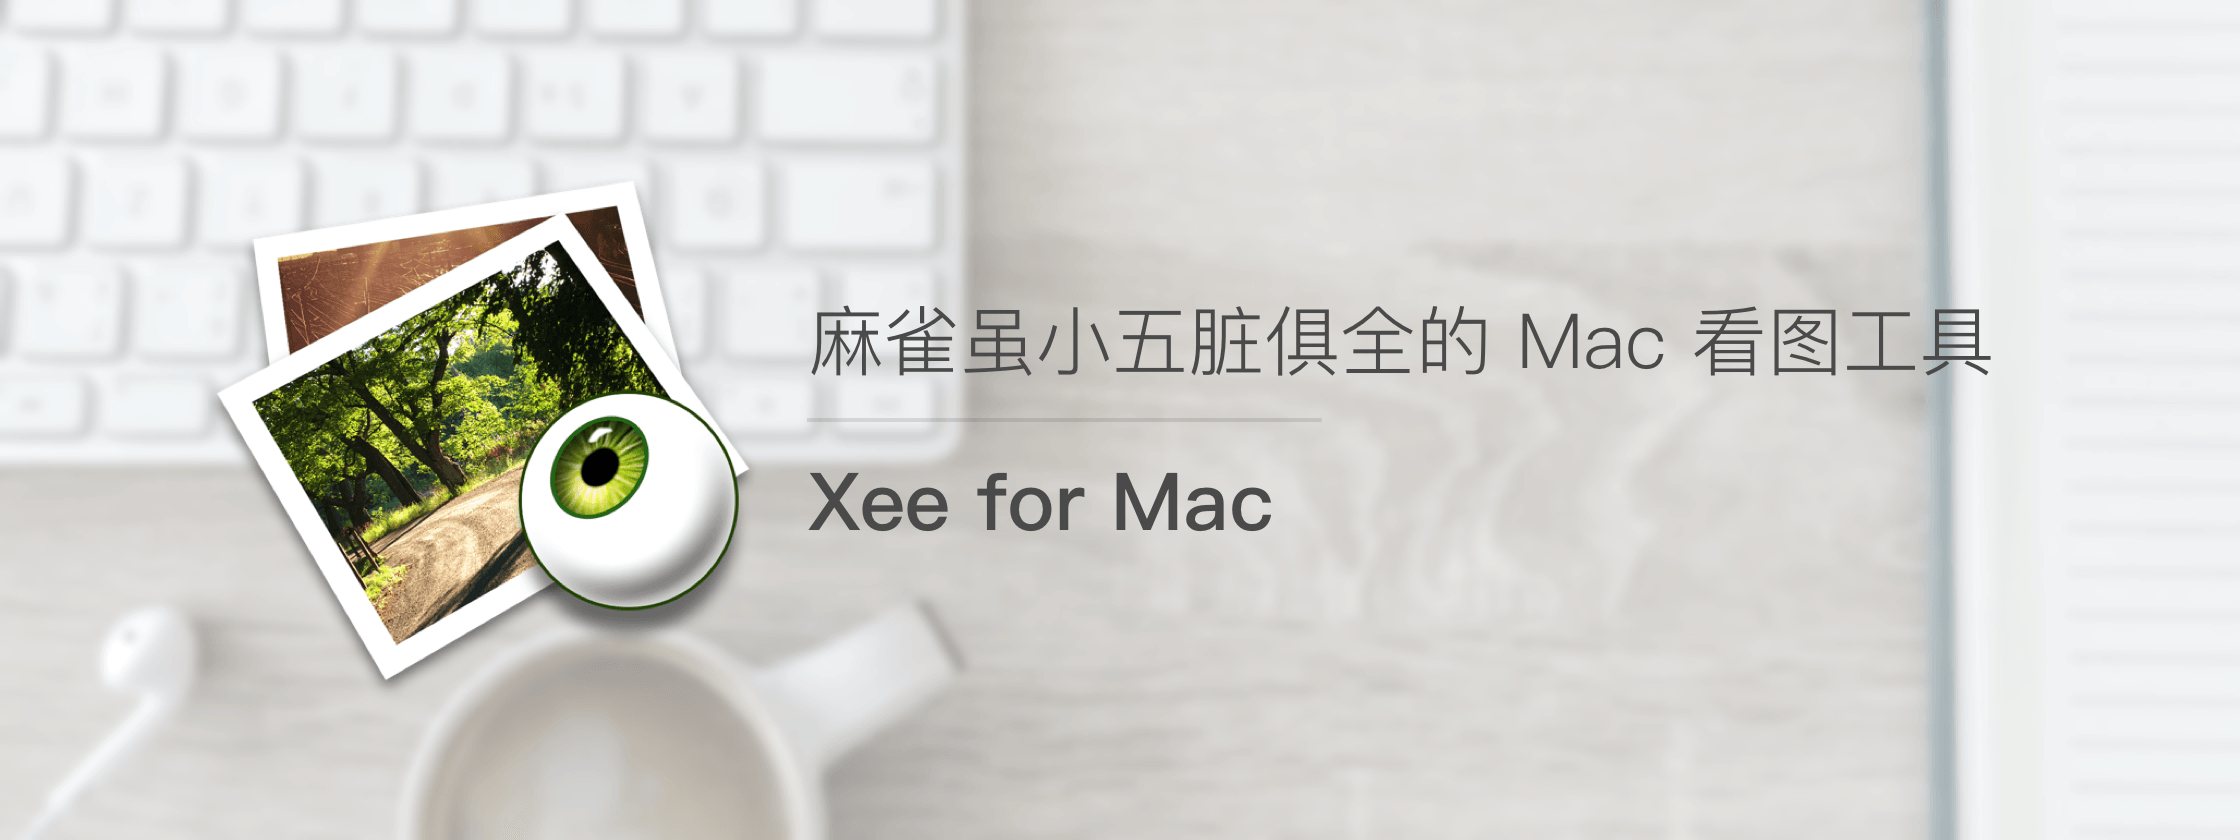 Xee for Mac – 麻雀虽小五脏俱全的 Mac 看图工具